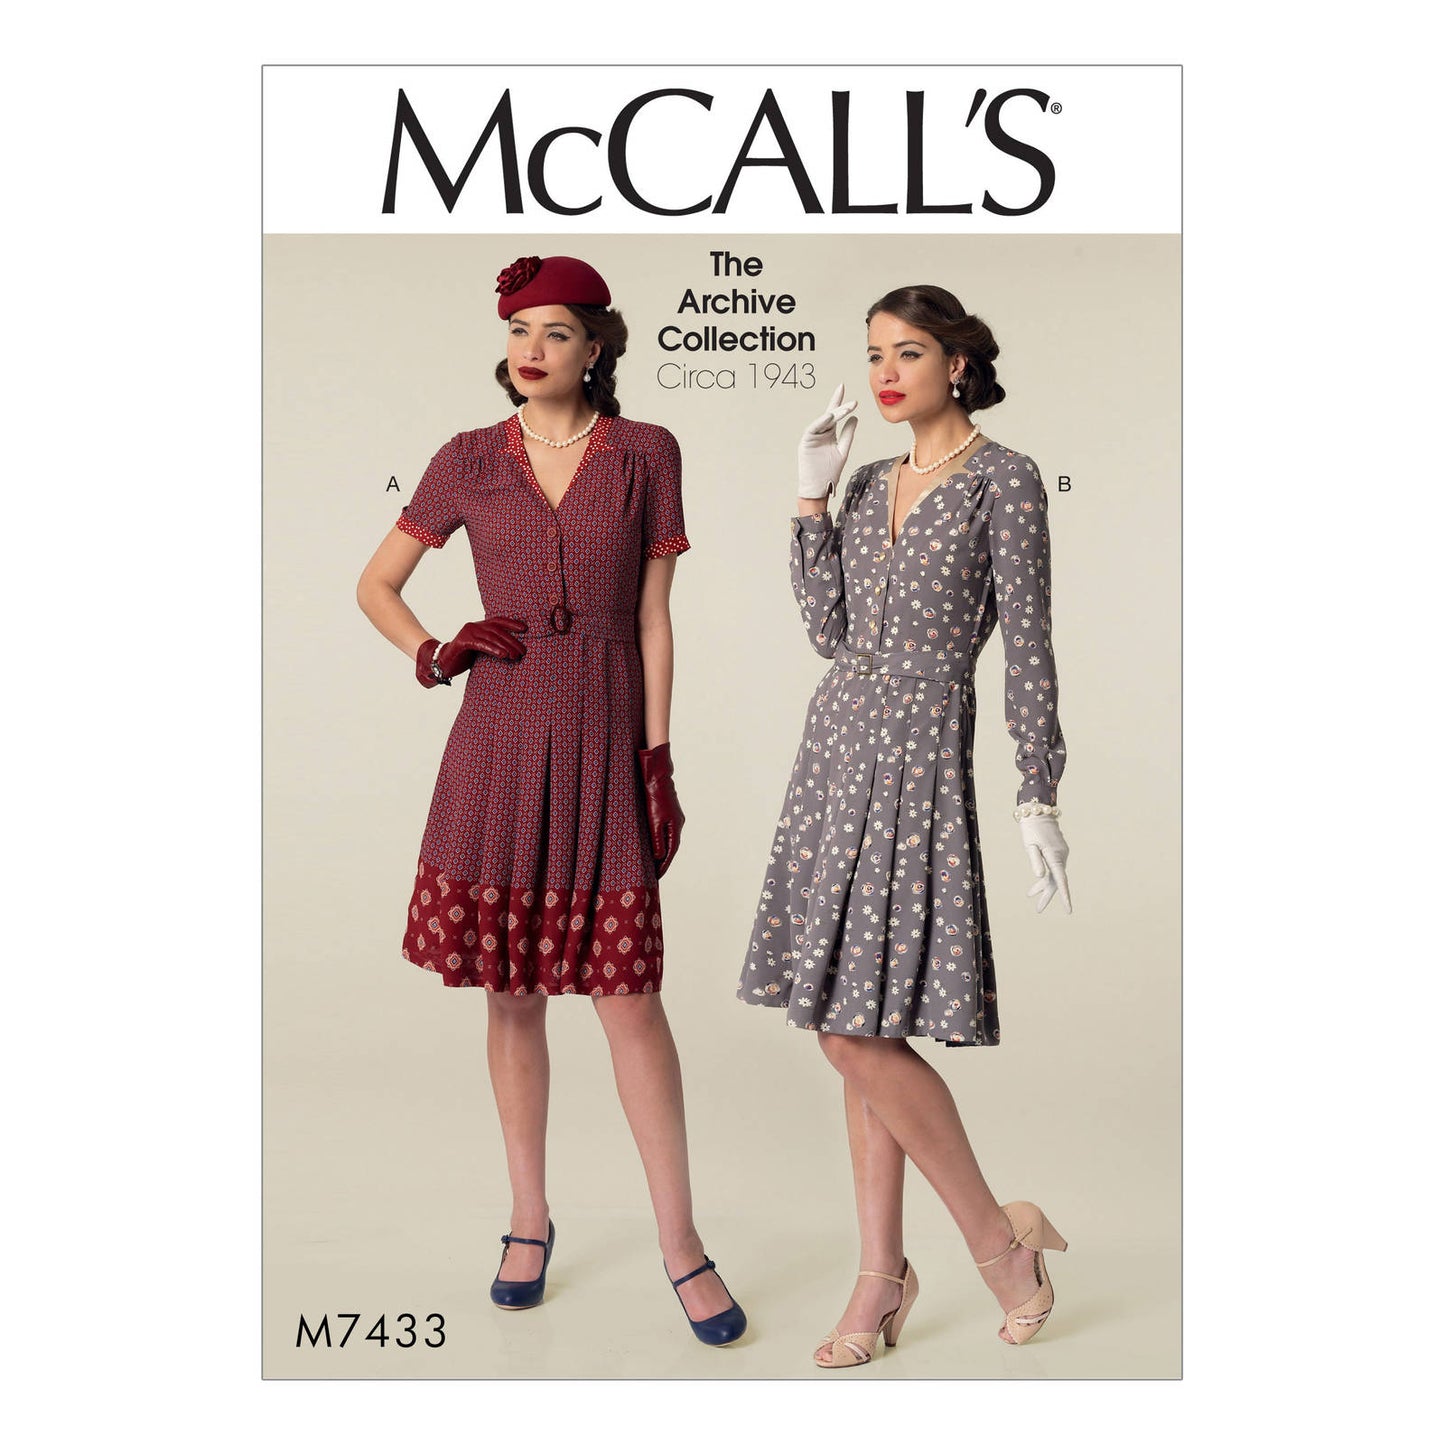 McCall's - 7433*